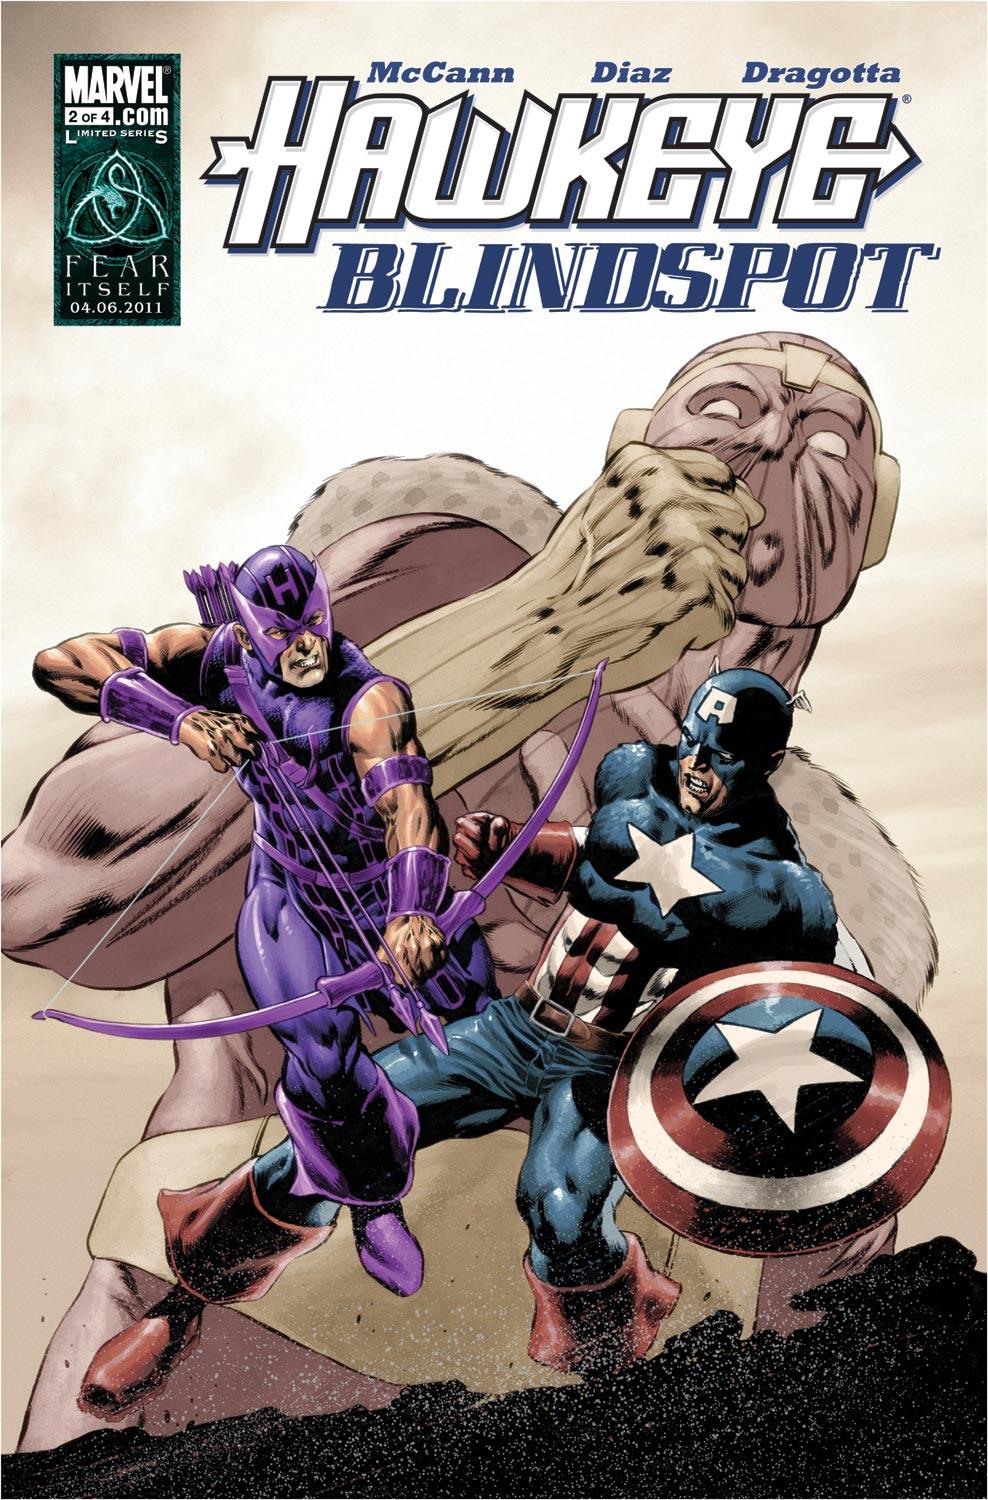 Hawkeye: Blindspot (2011) #2